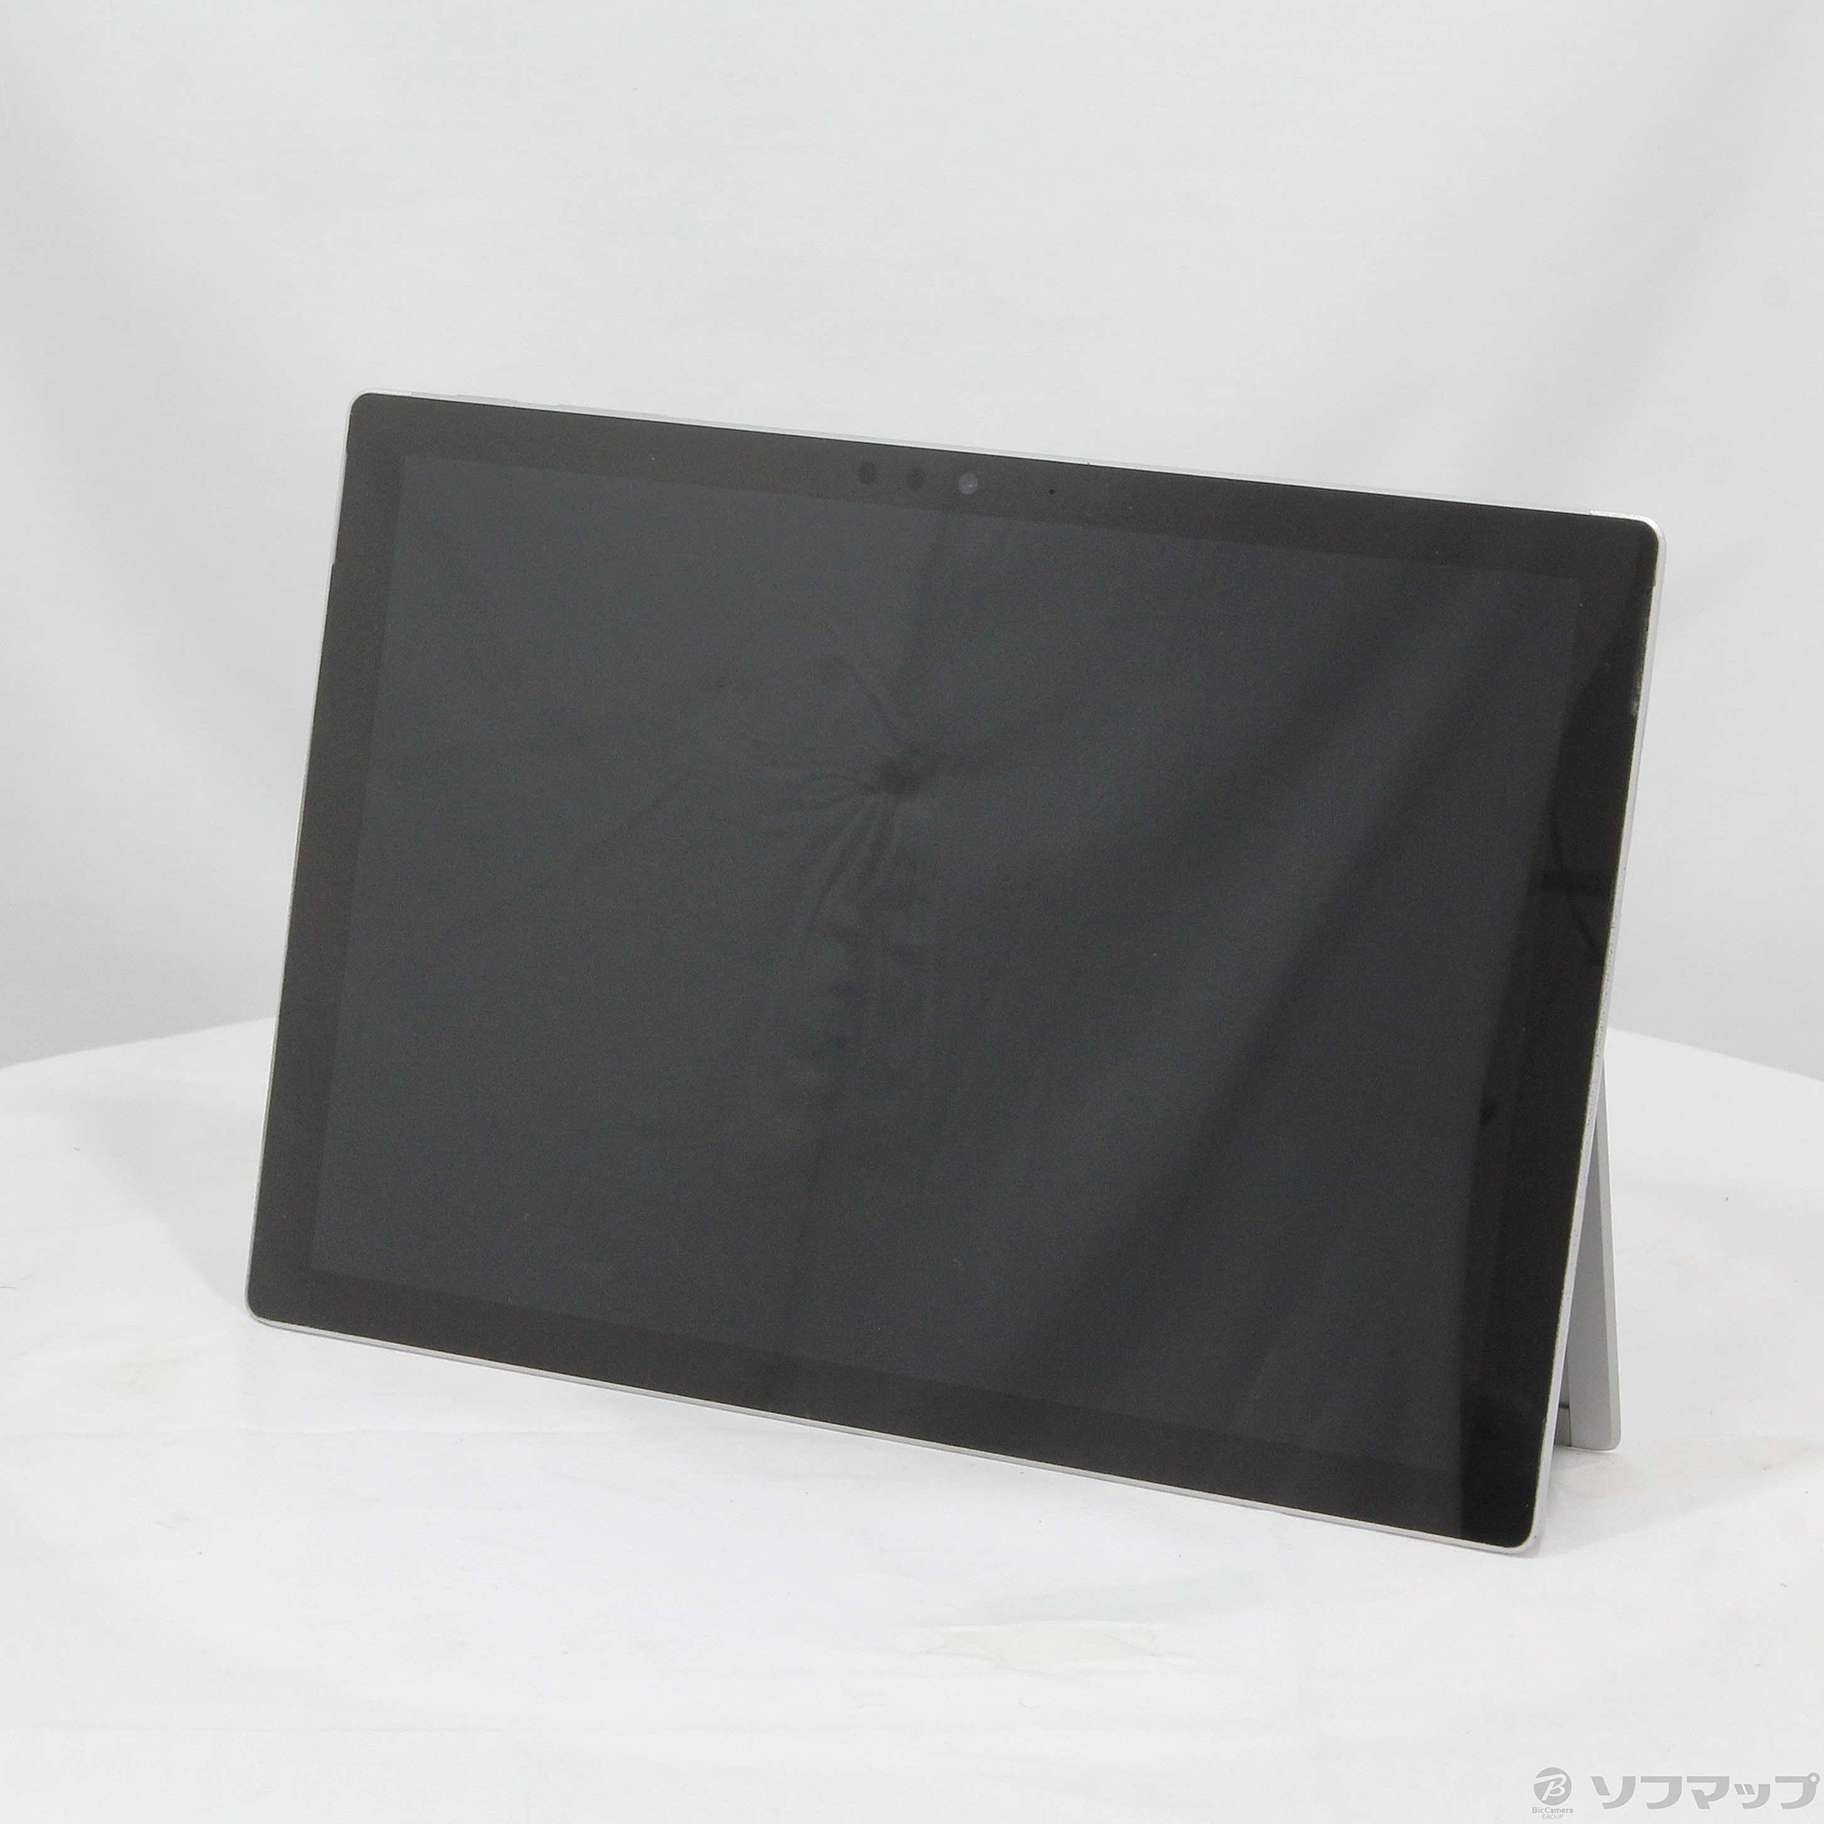 【新品】Microsoft Surface Pro6  KJT-00027